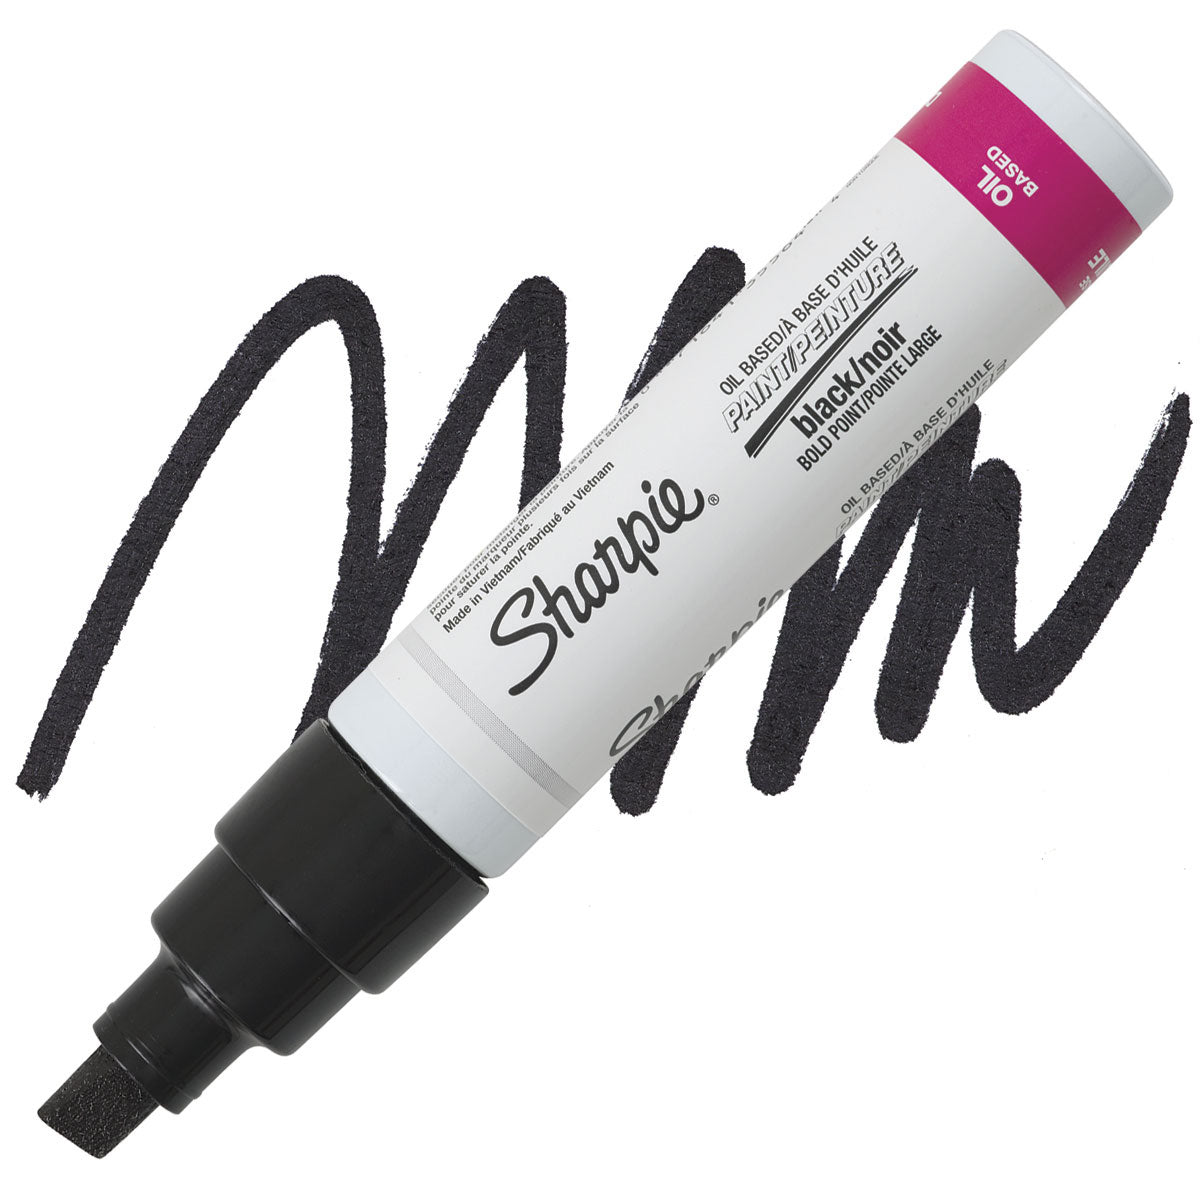 Sharpie Oil-based Bold Black Paint Pen/Marker in the Writing